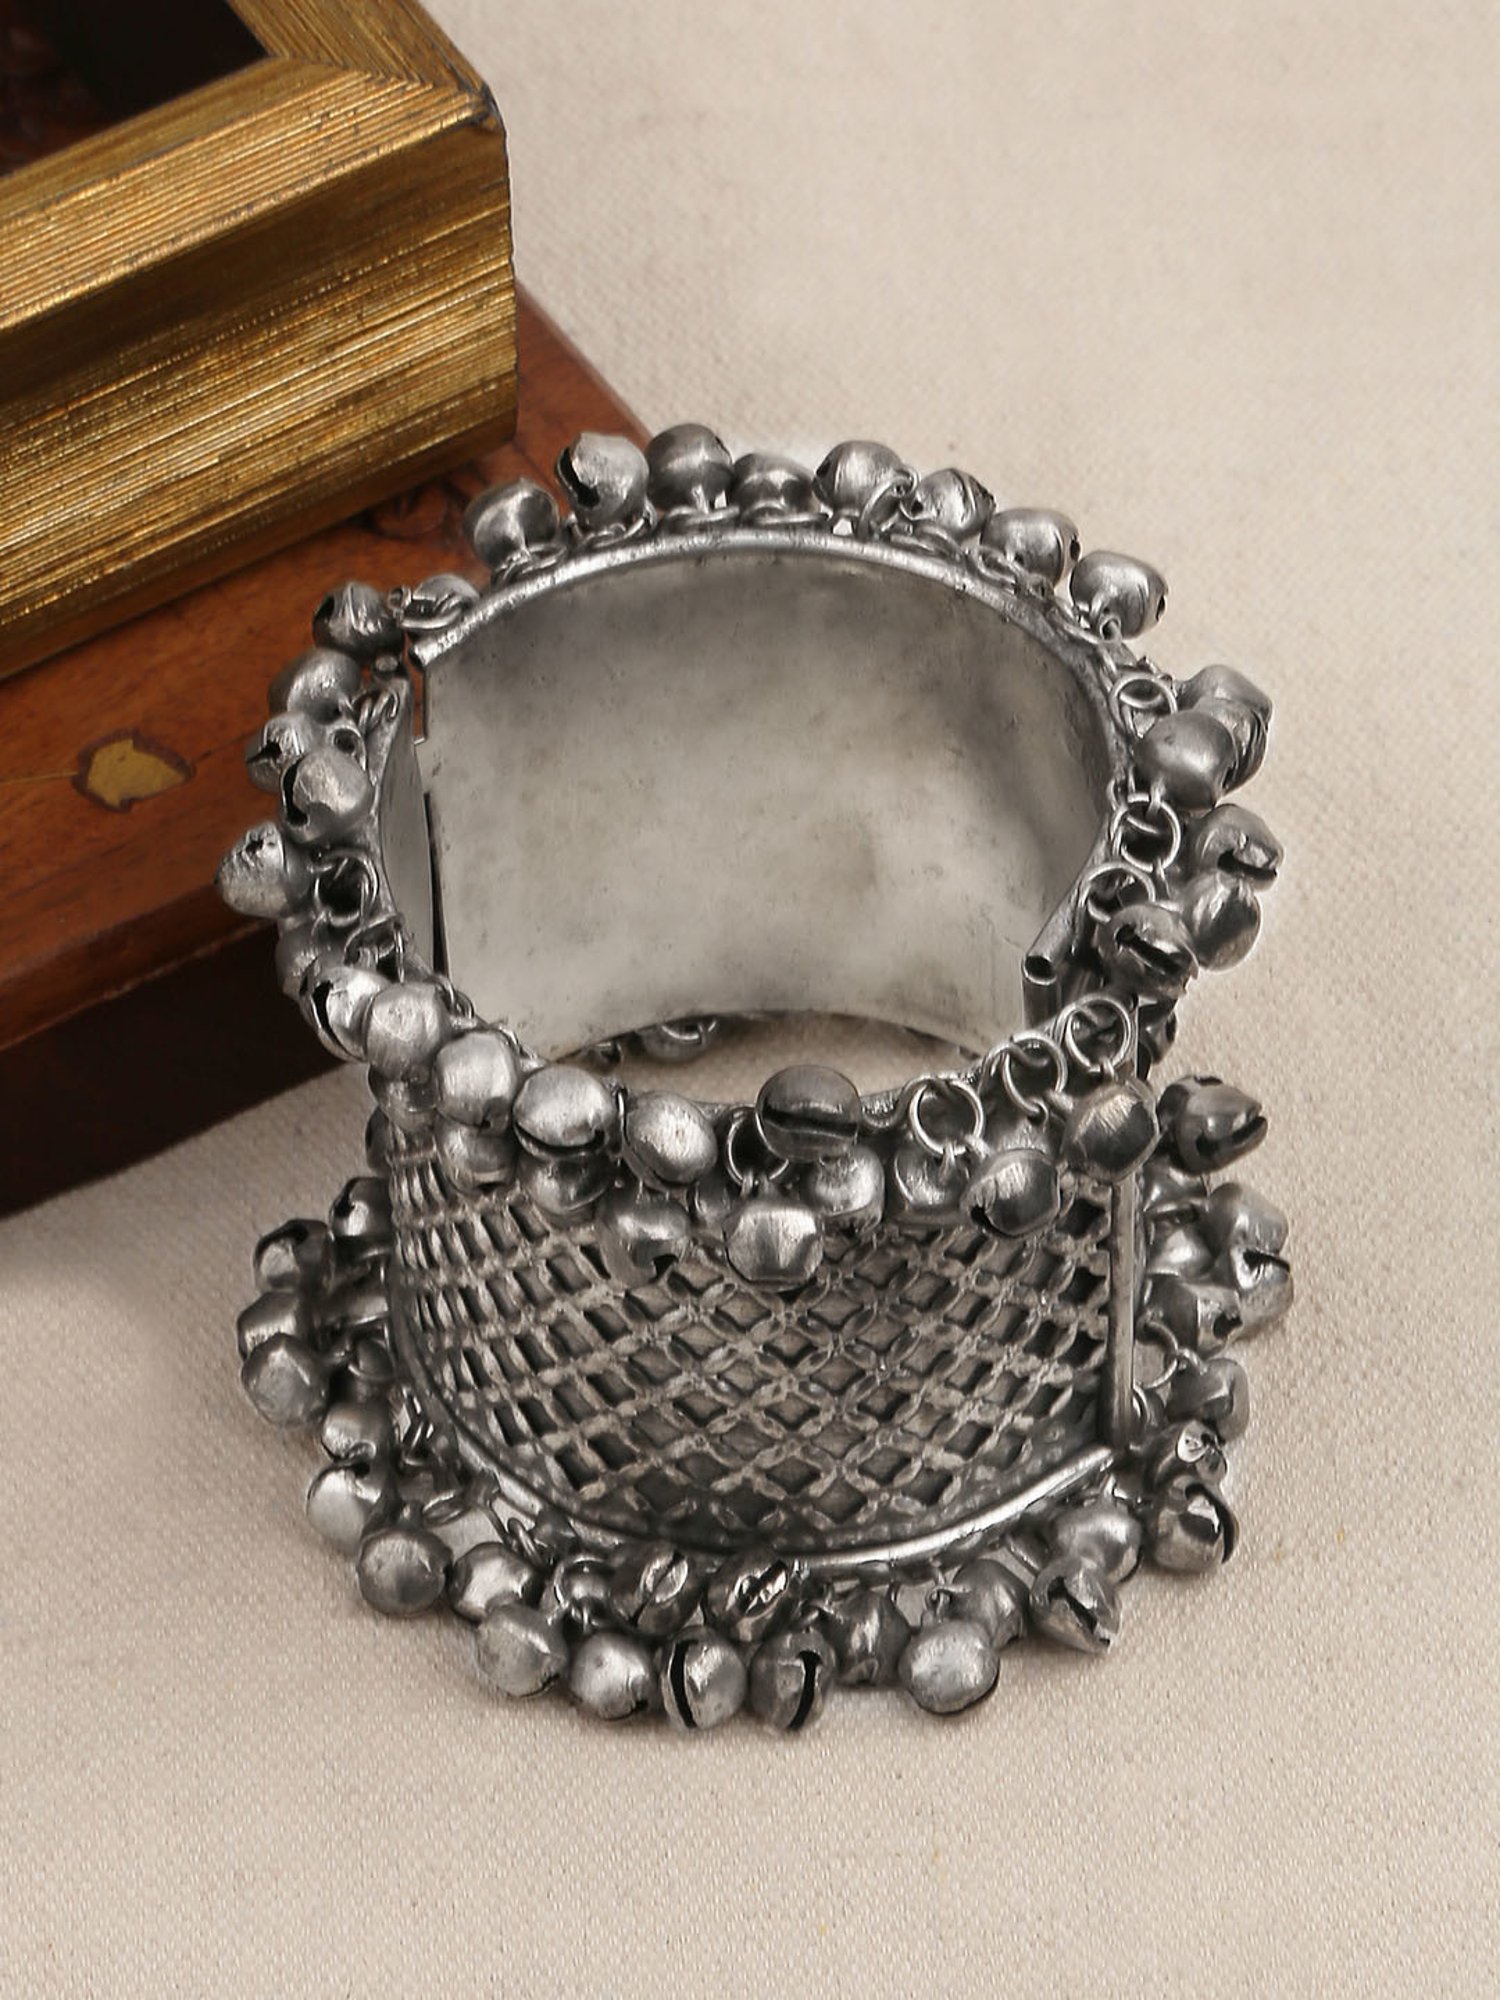 vintage silver cuff bracelet from India | eBay